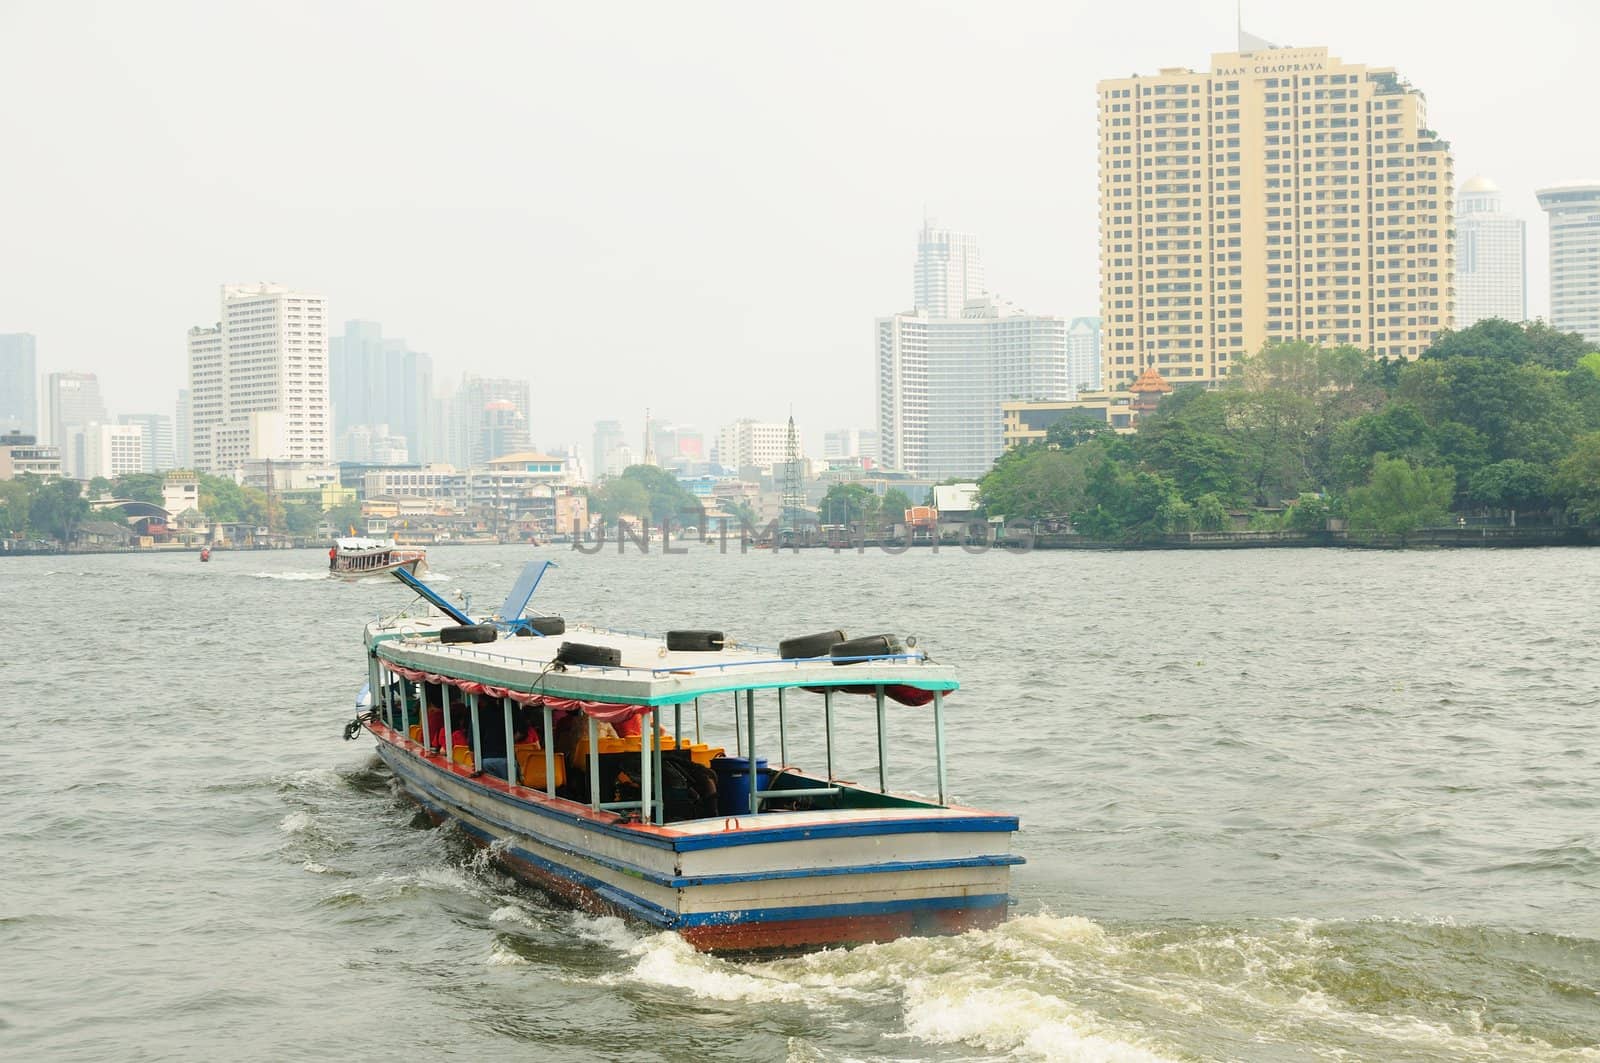 Boat in the river of Chao Praya in Bangkok, Thailand.